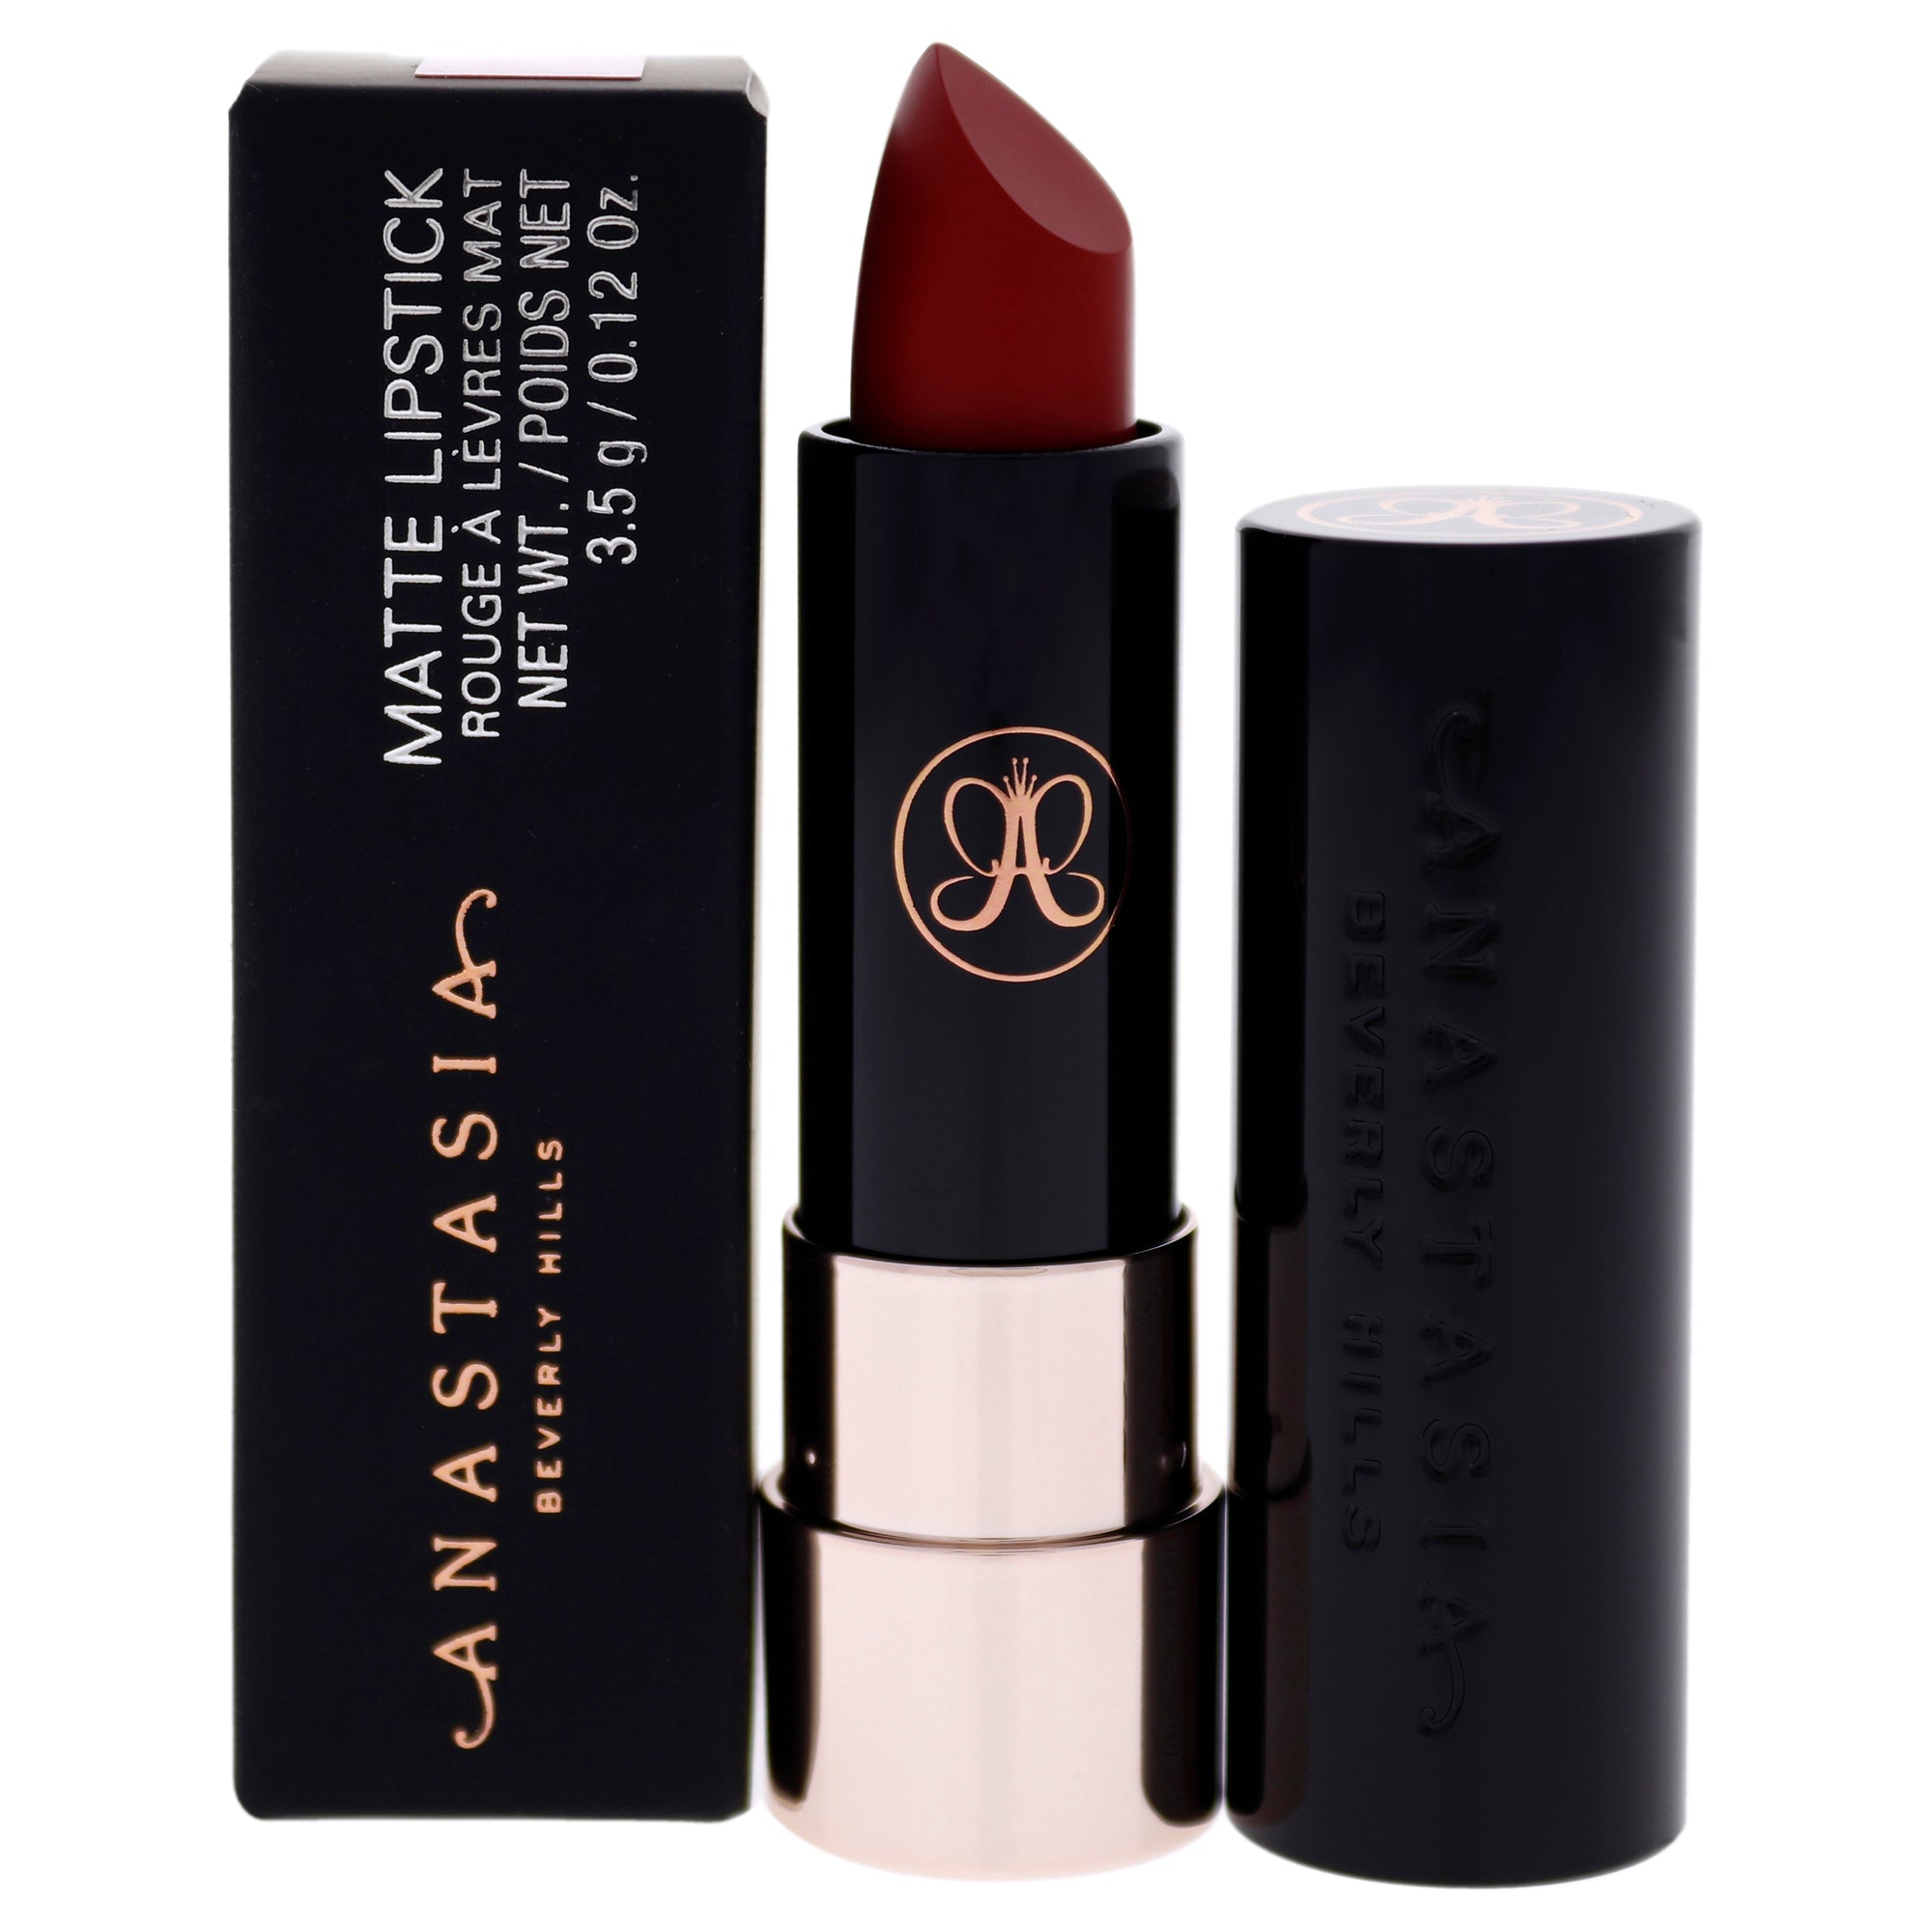 Matte Lipstick - Ruby by Anastasia Beverly Hills for Women - 0.12 oz Lipstick